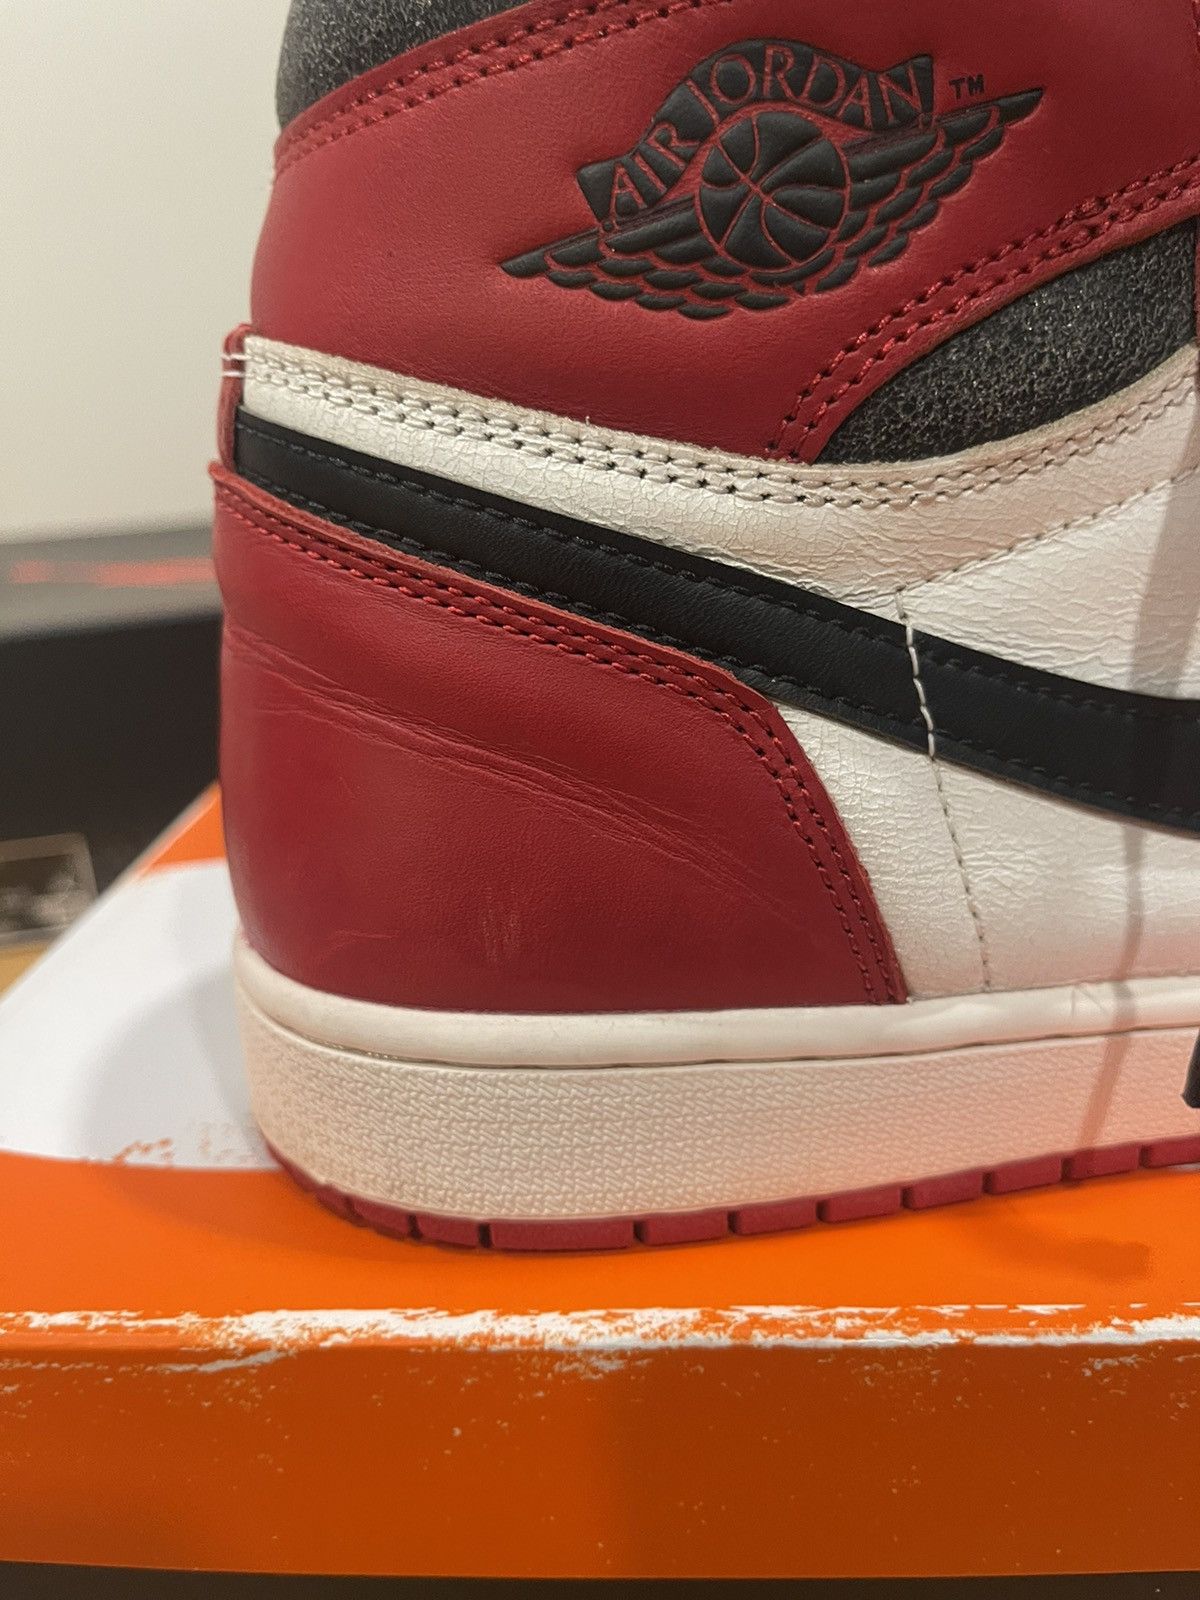 Nike Air Jordan 1 - Chicago “Lost & Found” Size US 10.5 / EU 43-44 - 8 Thumbnail